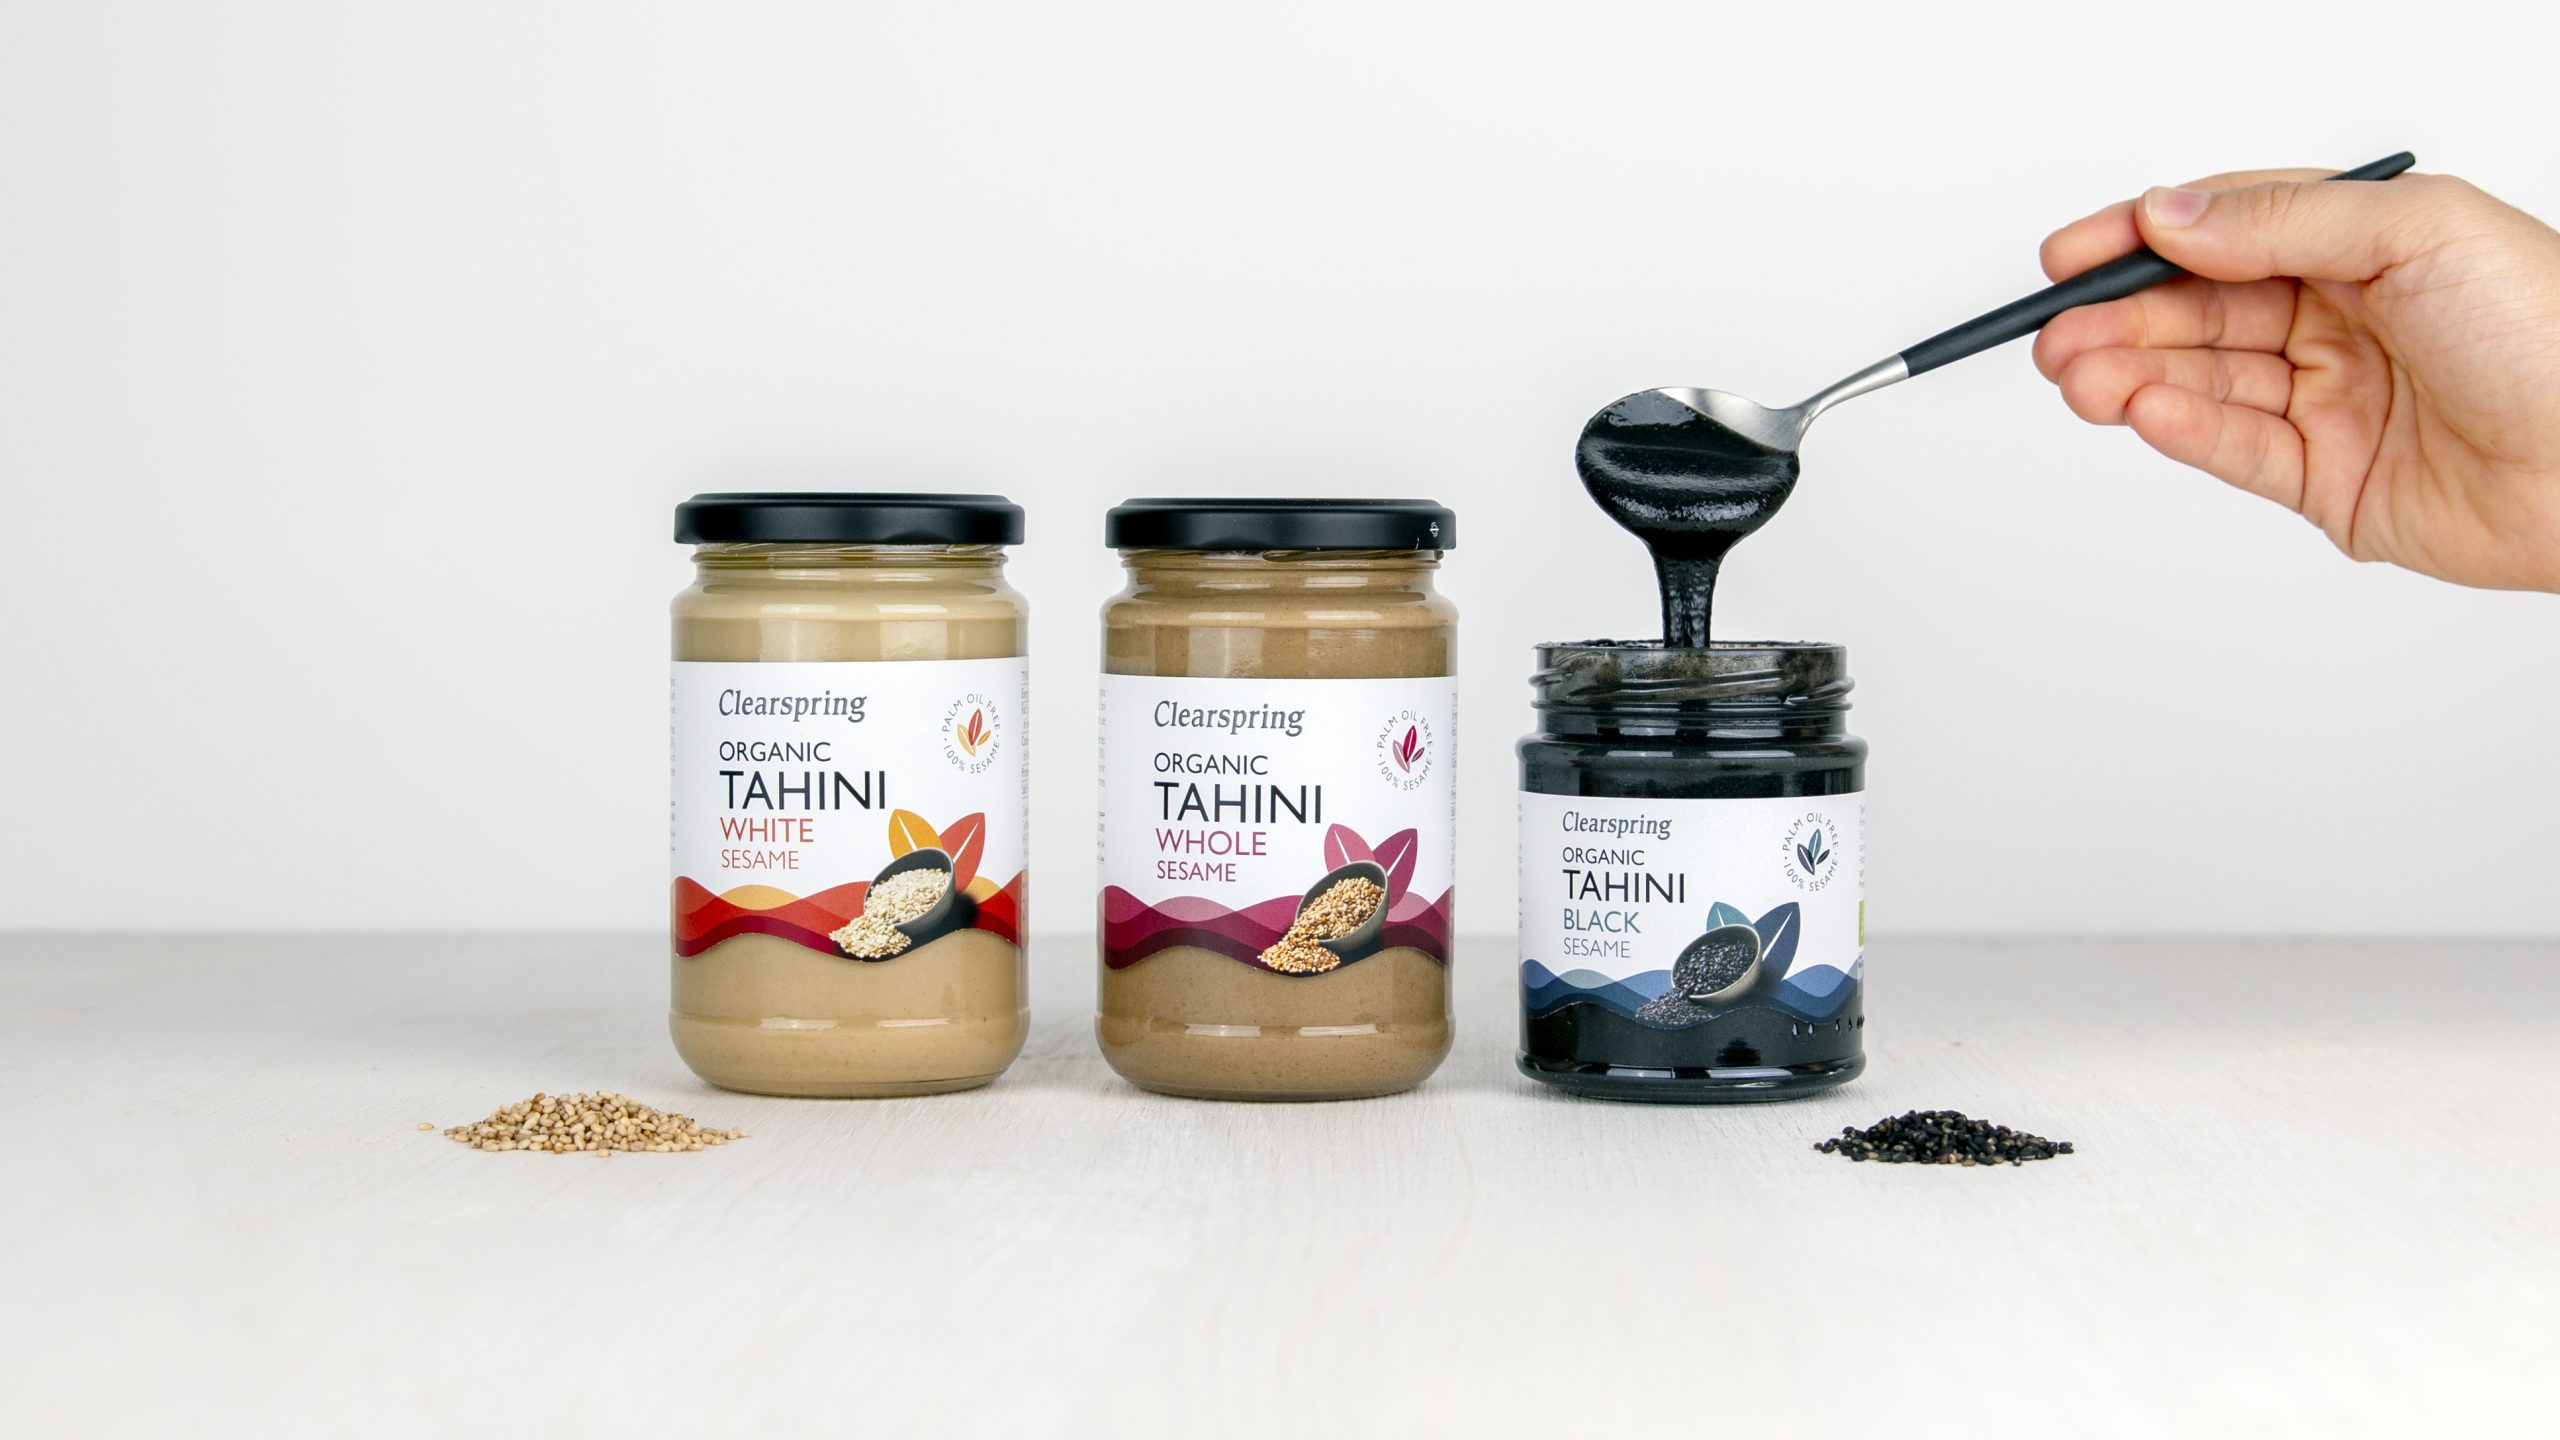 Clearspring adds Trio of Premium Organic Tahinis to range